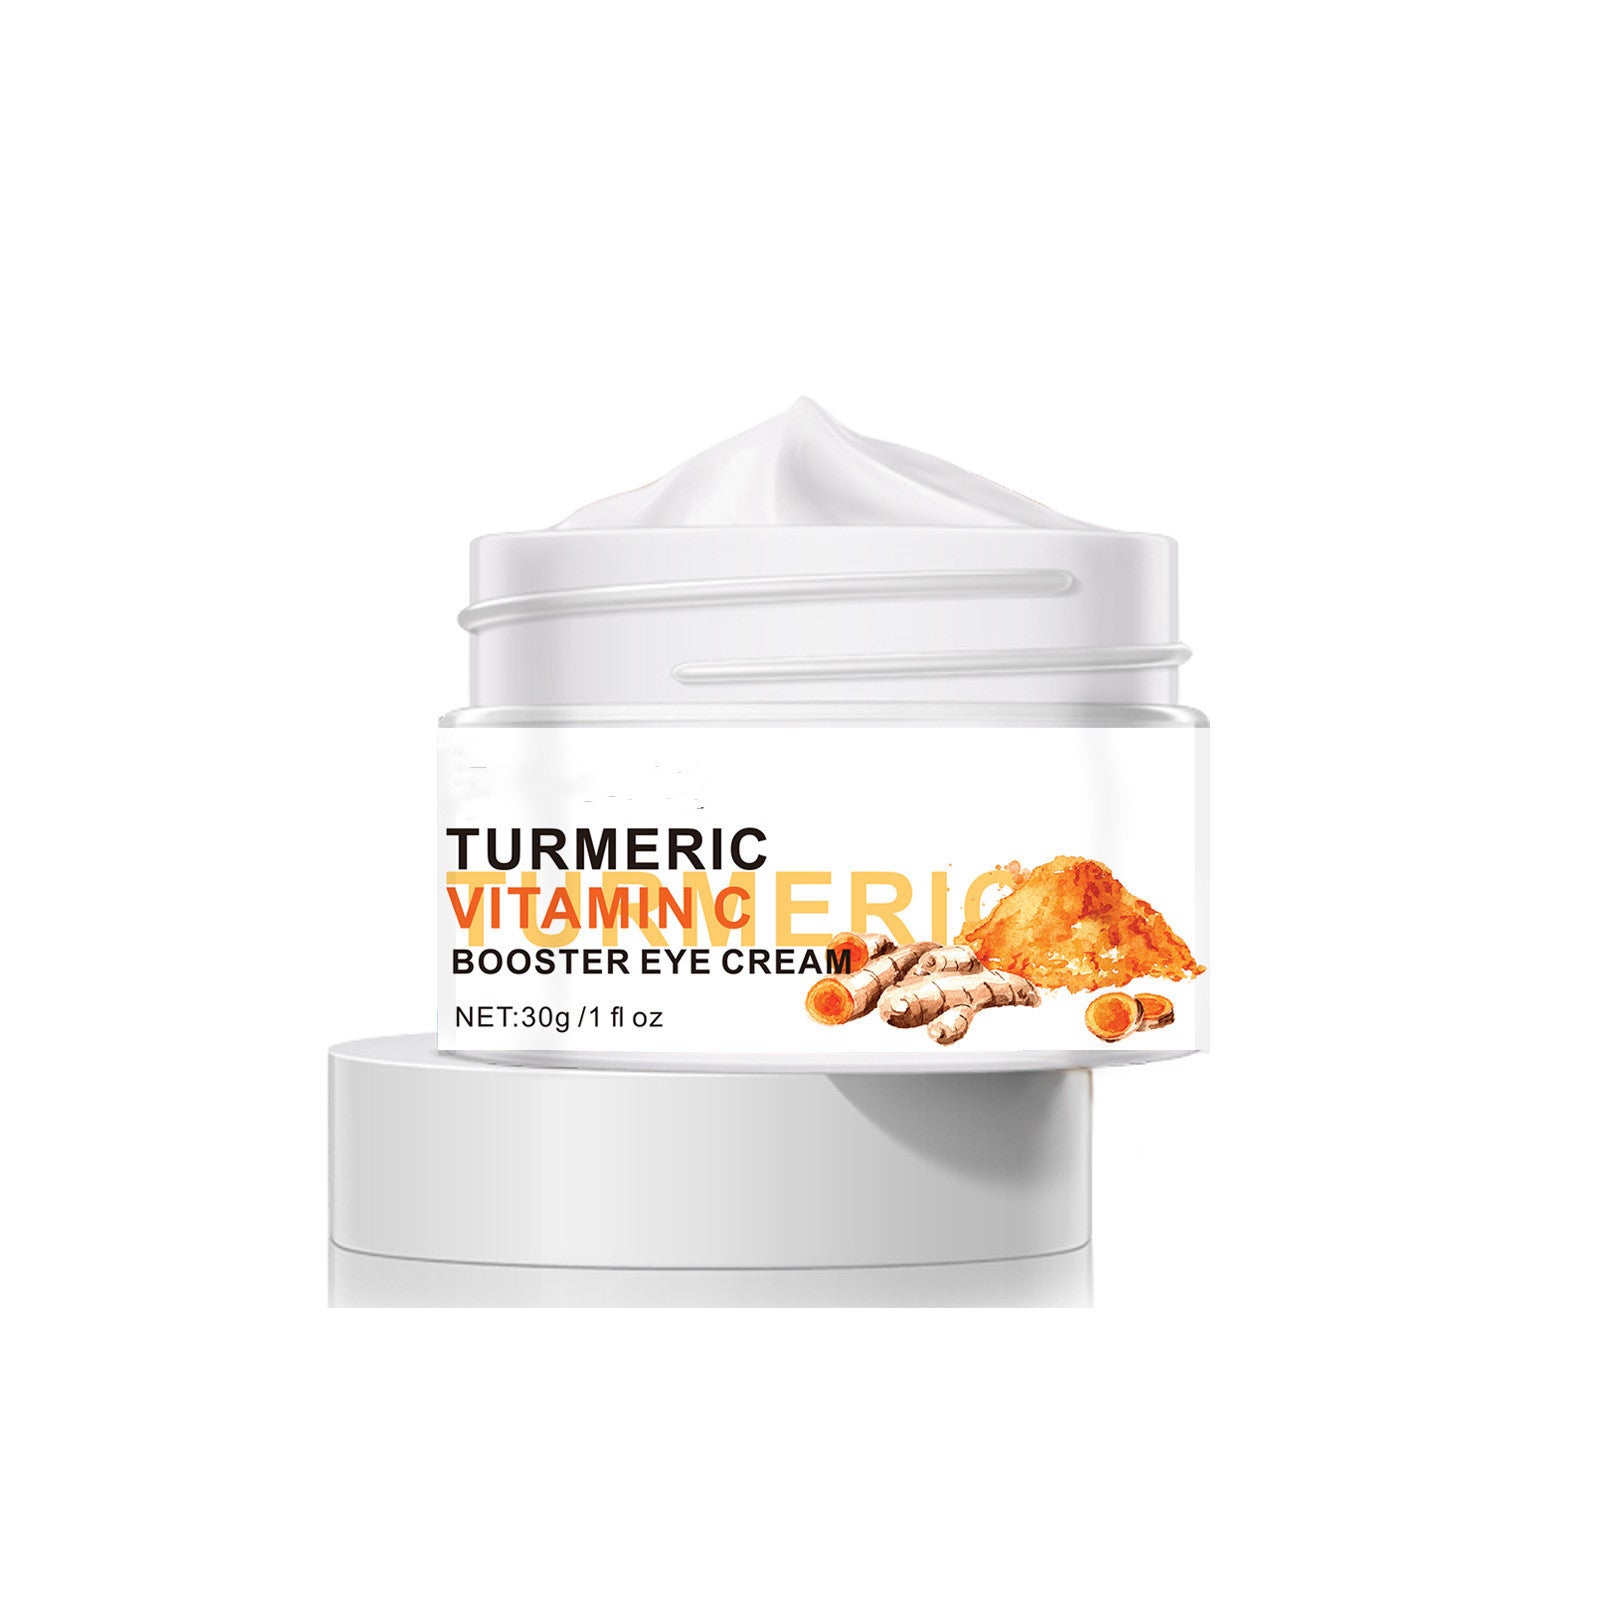 Turmeric Vitamin C Eye Cream